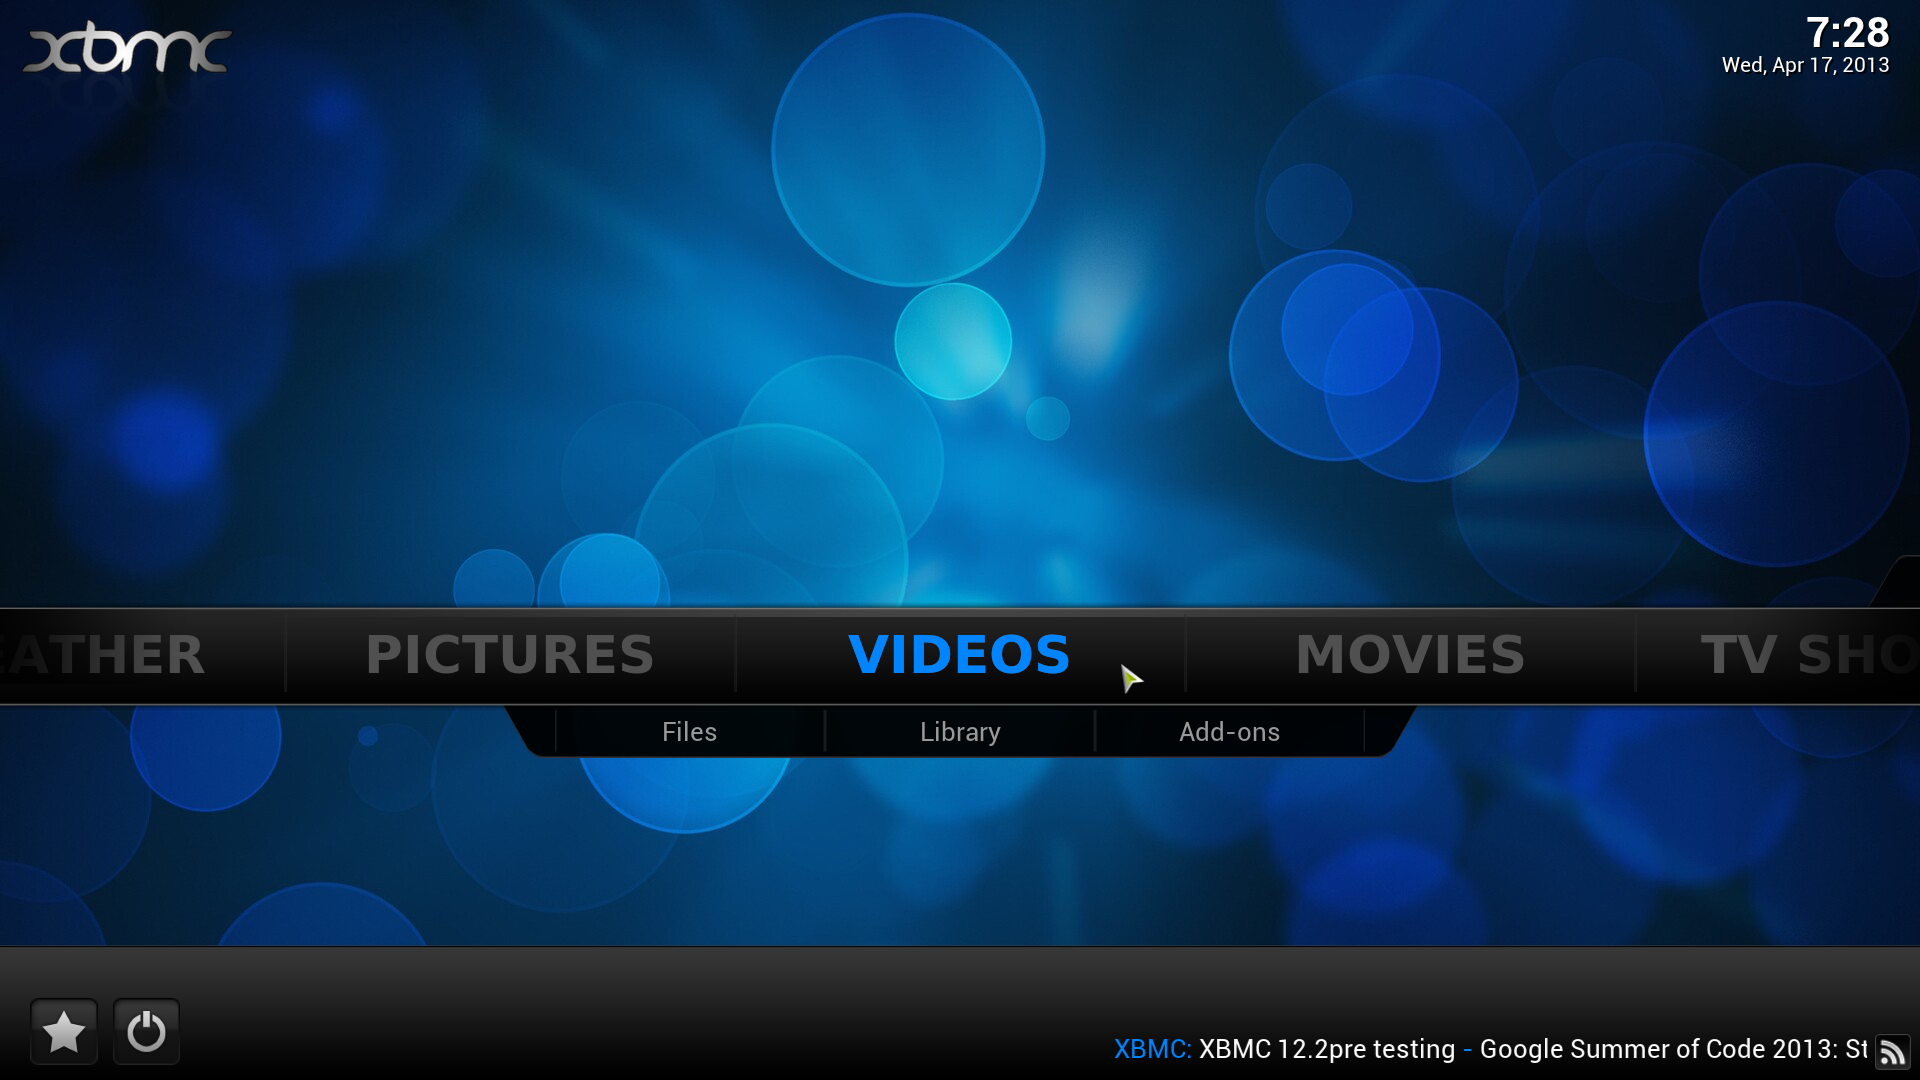 Step 1: Select "Videos" on main menu.